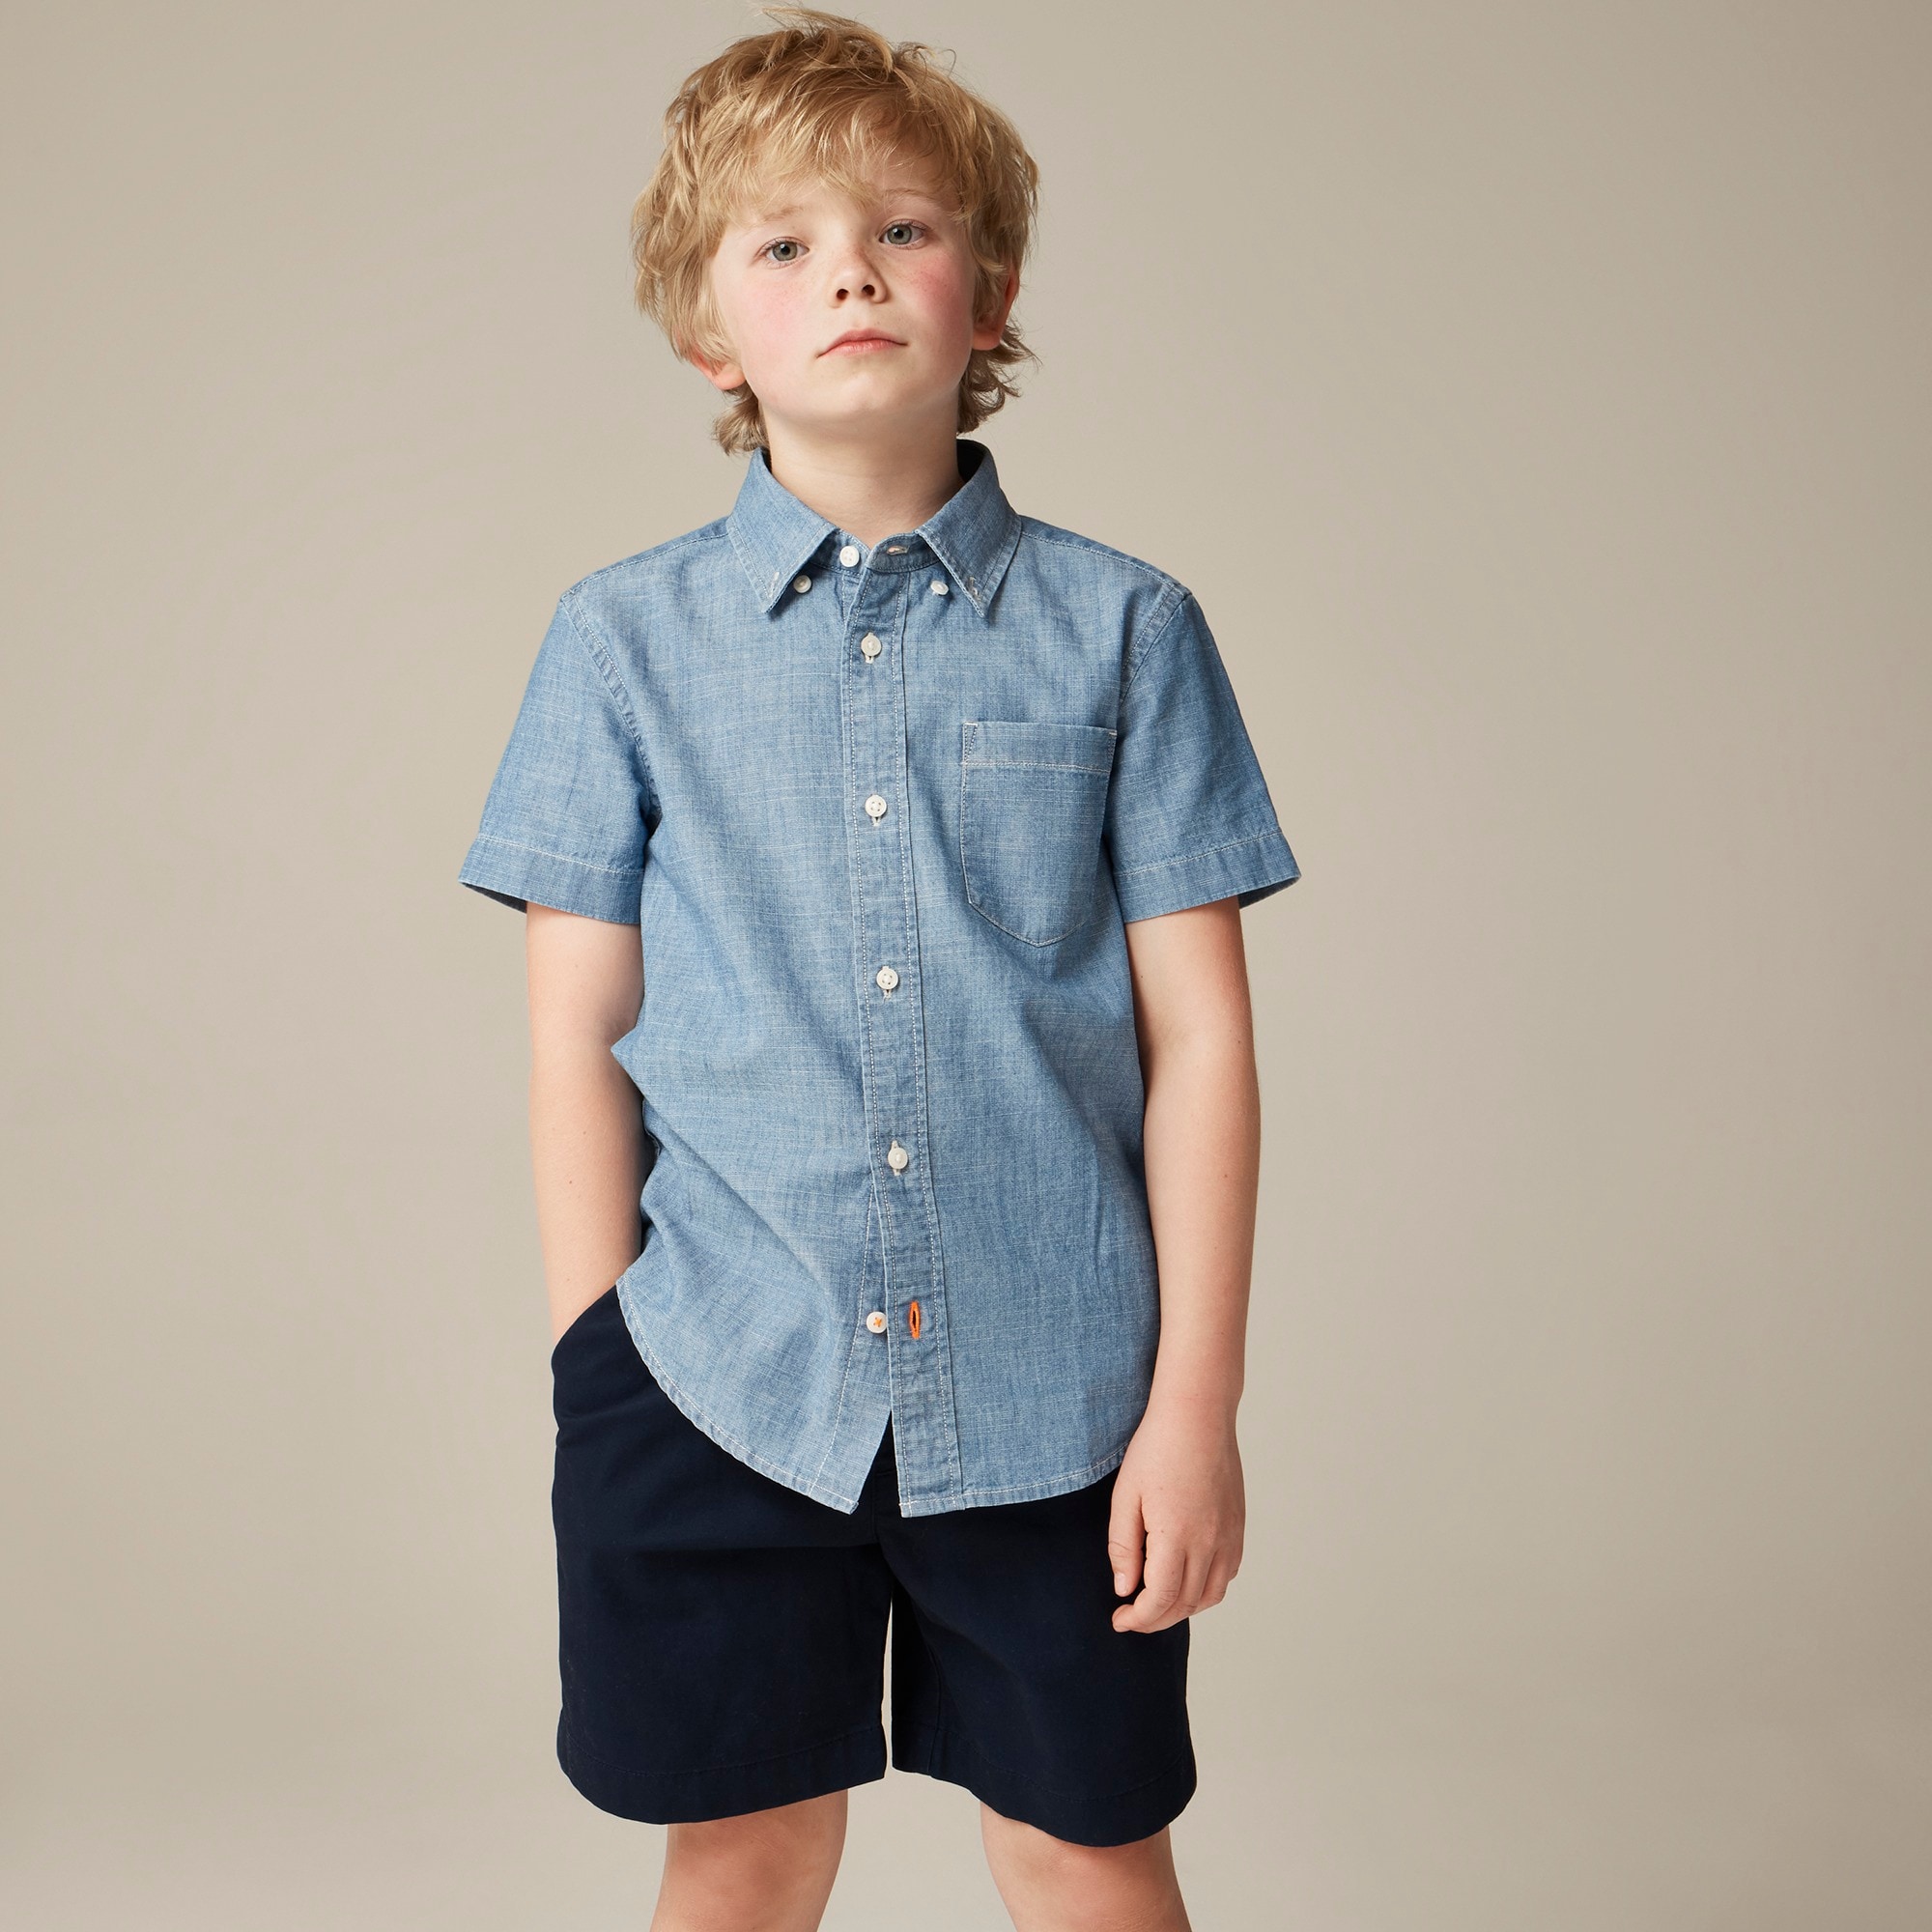  Kids' short-sleeve chambray shirt